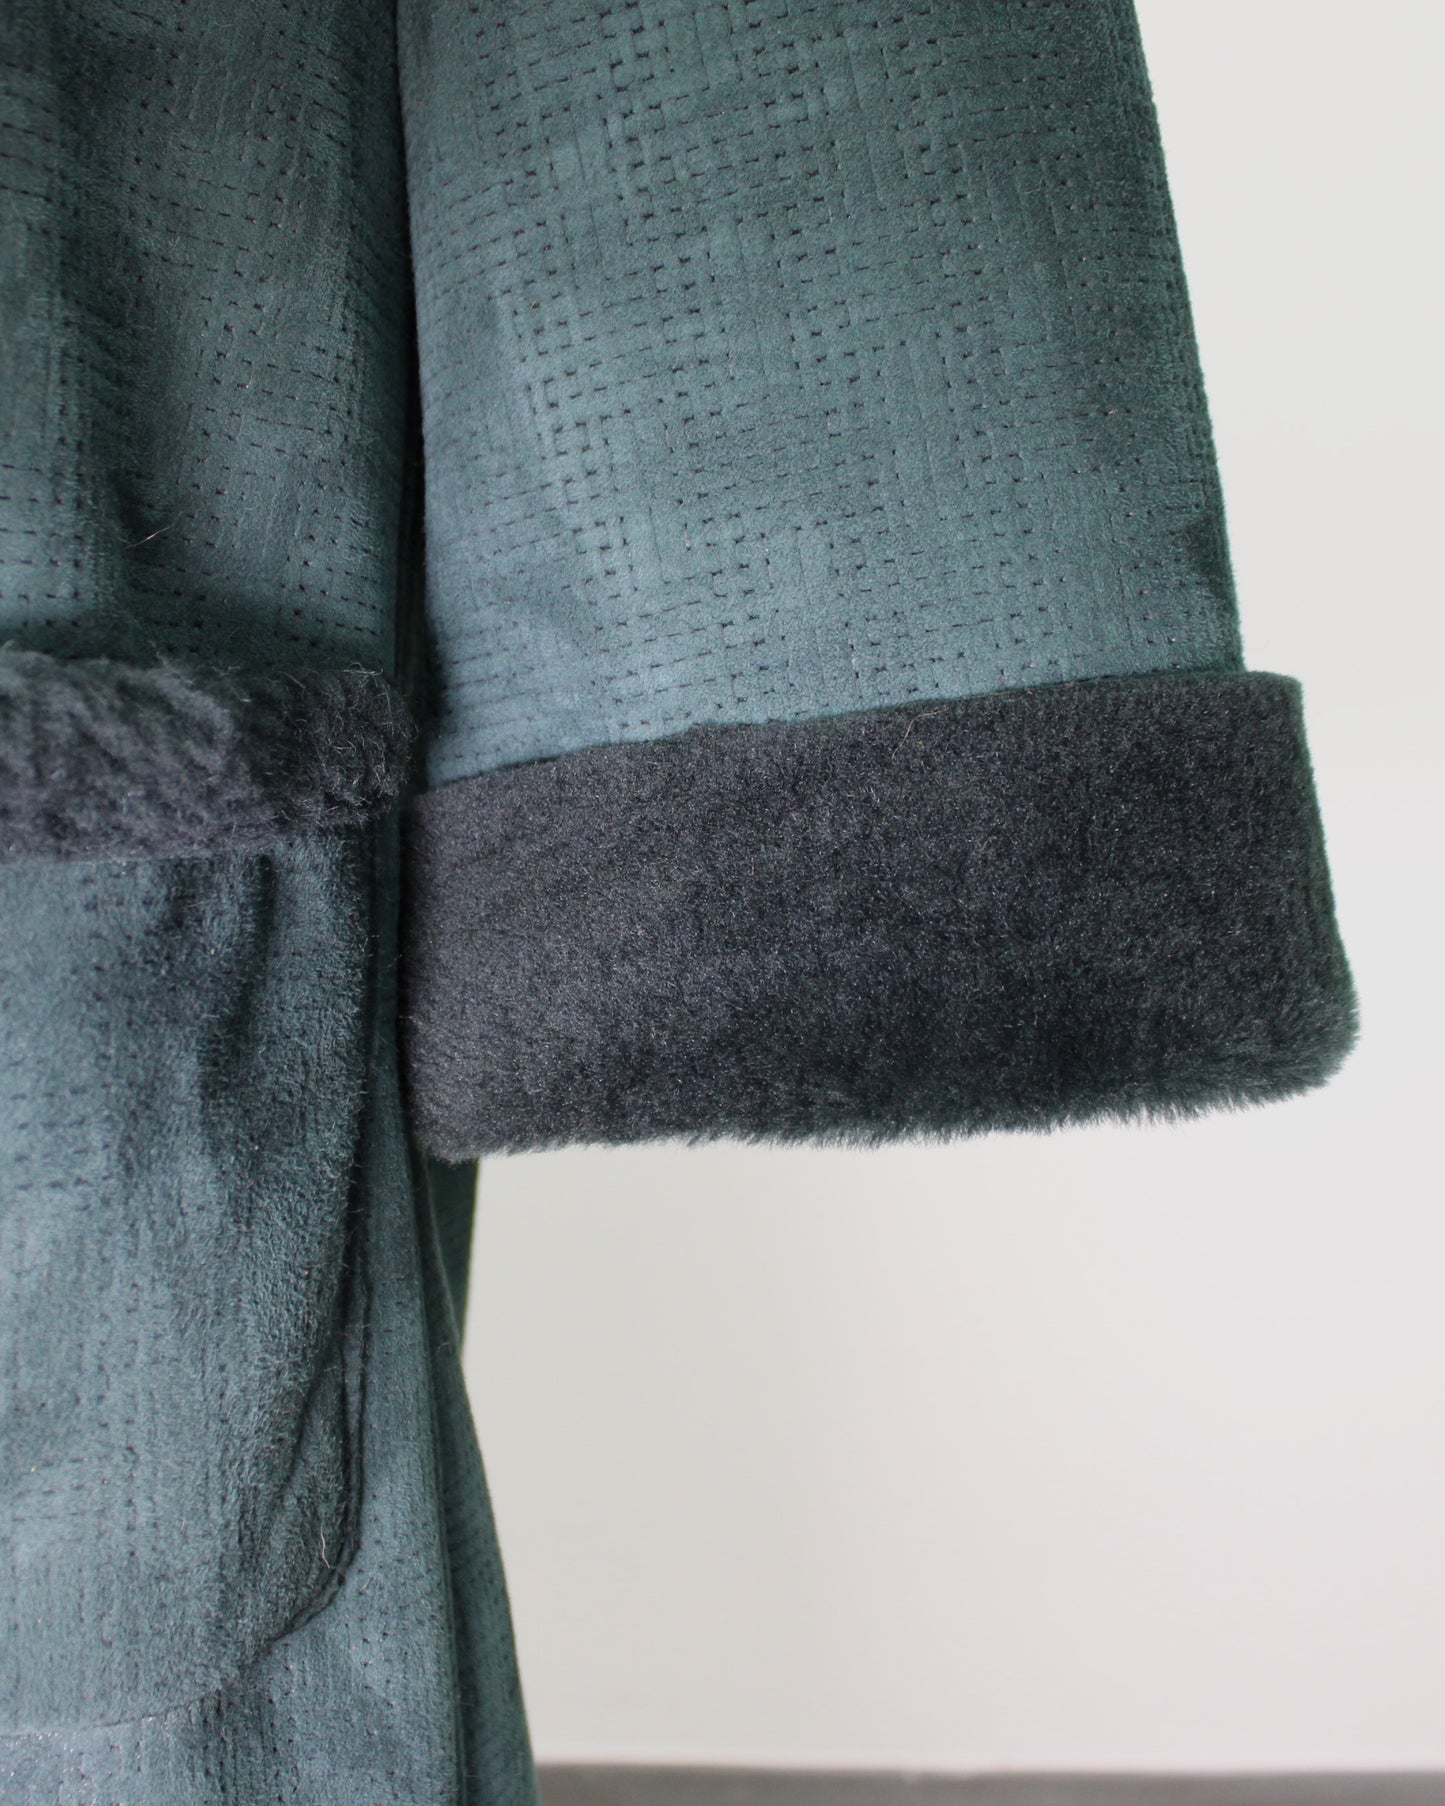 Veste en peau de mouton pour femme - Collection Artisan Made in Italy par Ferdinando Patermo